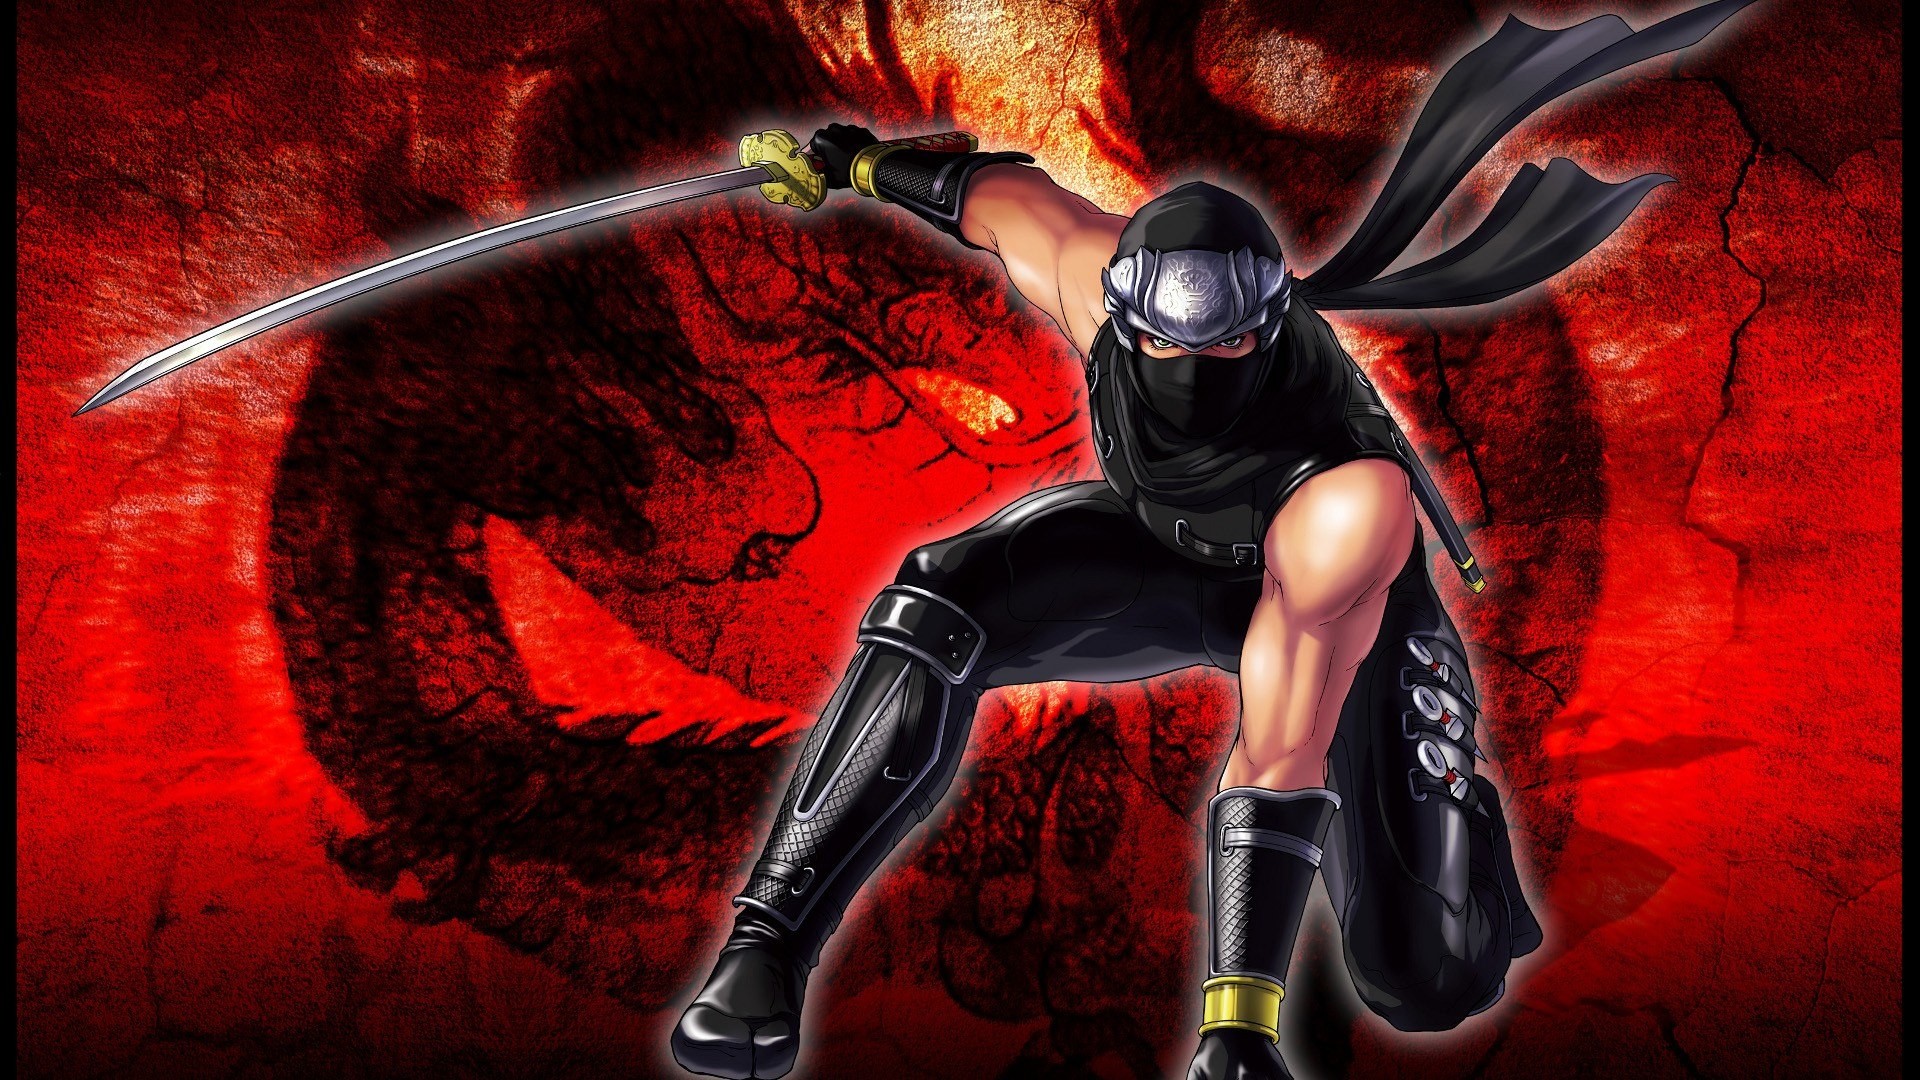 ninja gaiden wallpaper,action adventure game,demon,cg artwork,fictional character,illustration